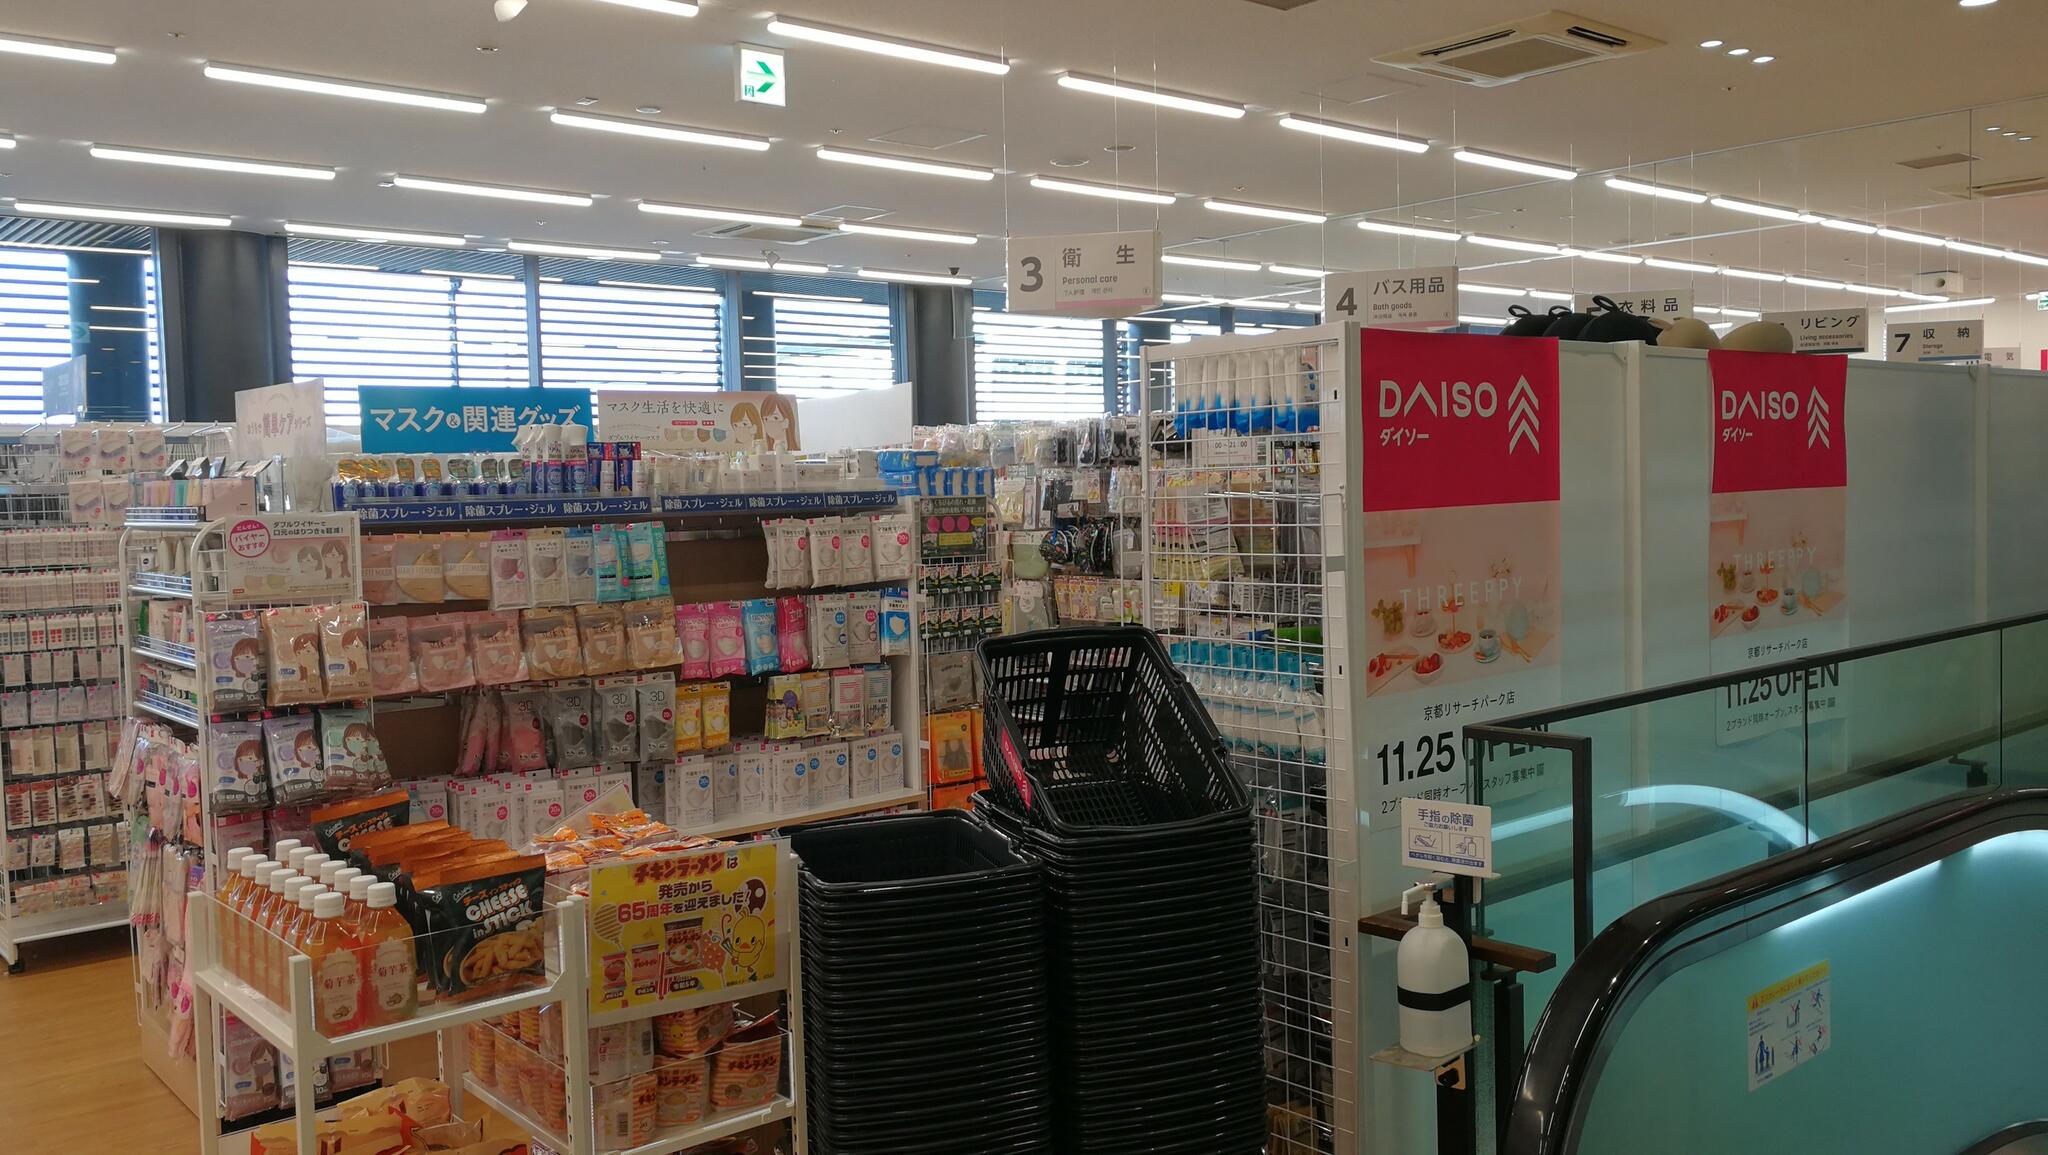 DAISO 京都リサーチパーク店の代表写真3